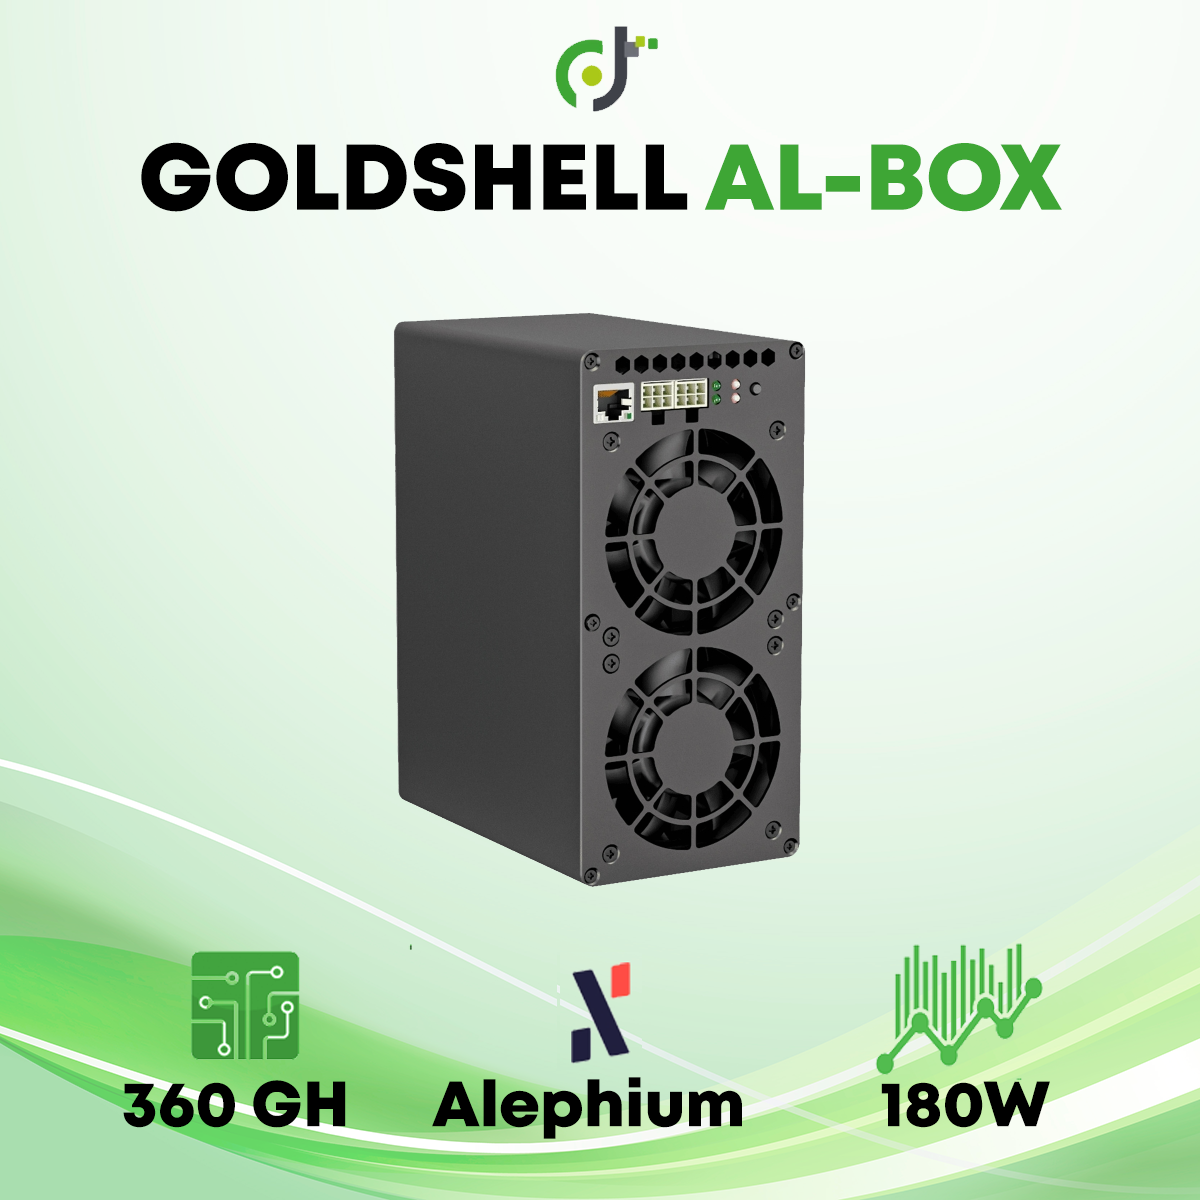 Goldshell AL-BOX (360GH/s) Alephium Miner